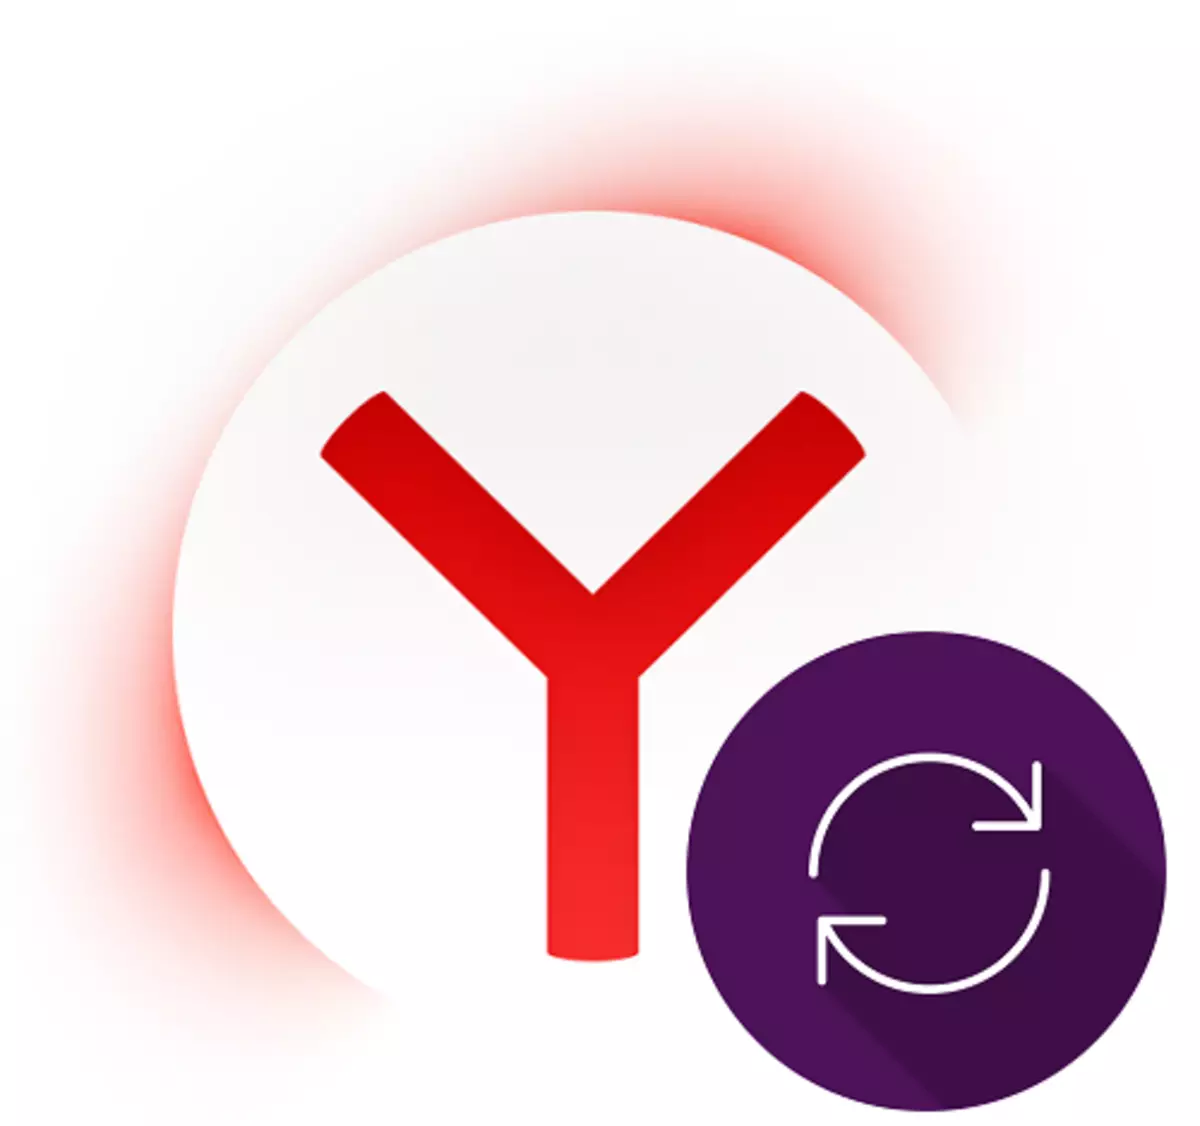 Yandex.bauser चे सिंक्रोनाइझेशन